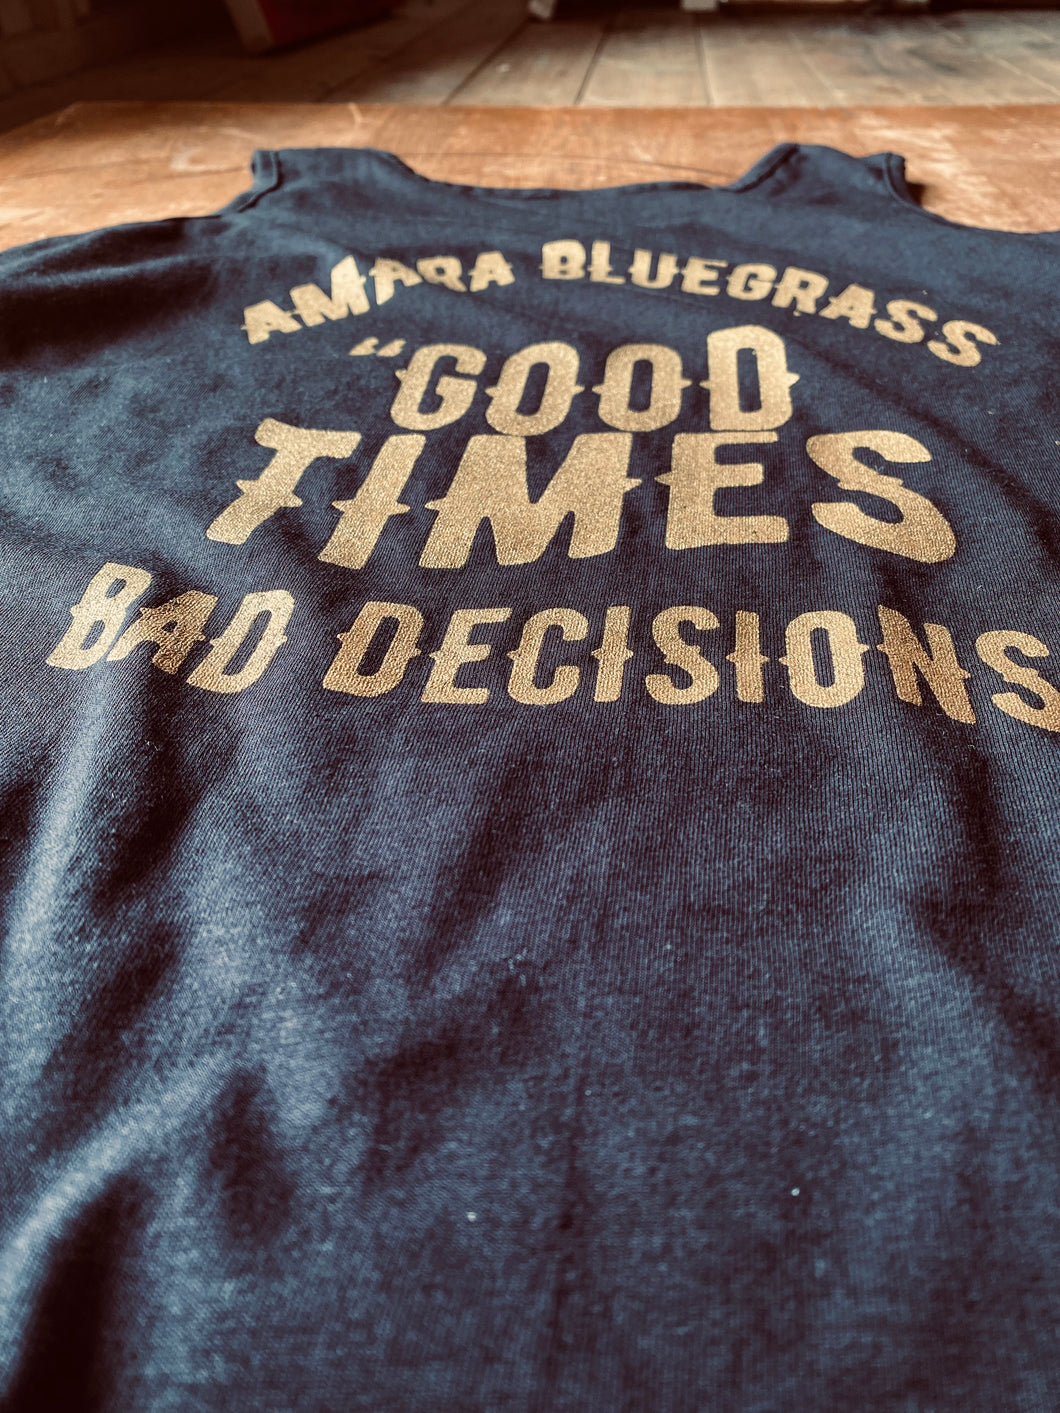 Good times bad decisions ‘Marbella’ edition gym vest